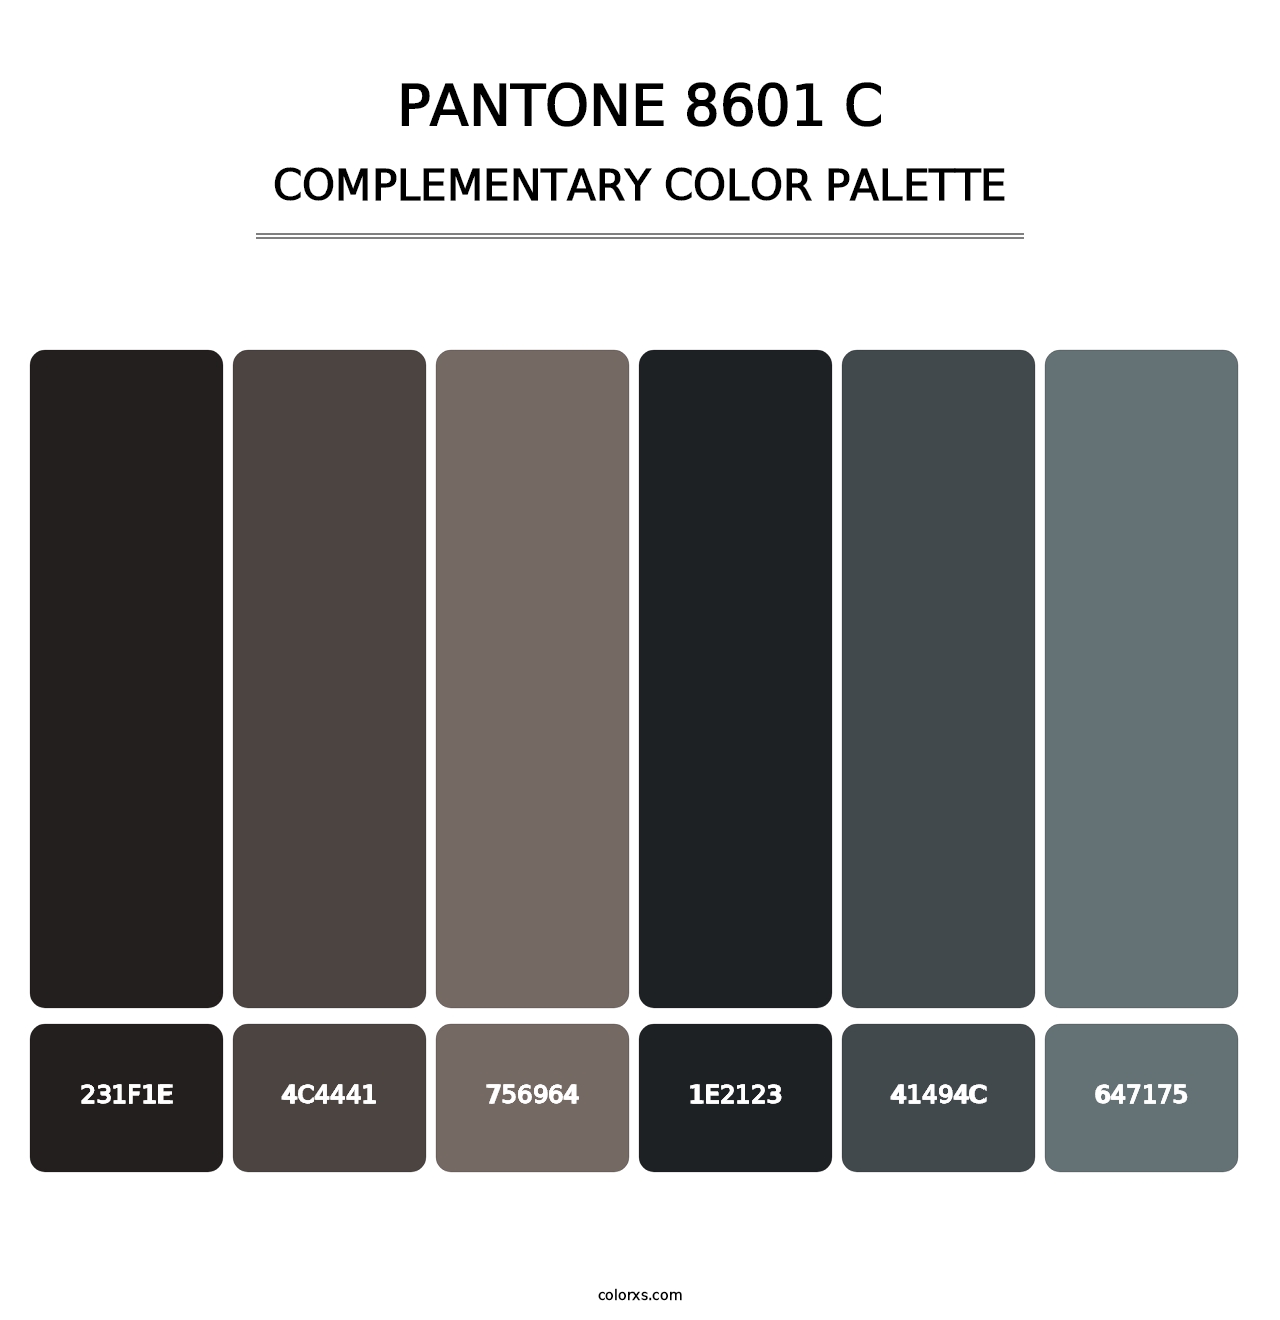 PANTONE 8601 C - Complementary Color Palette